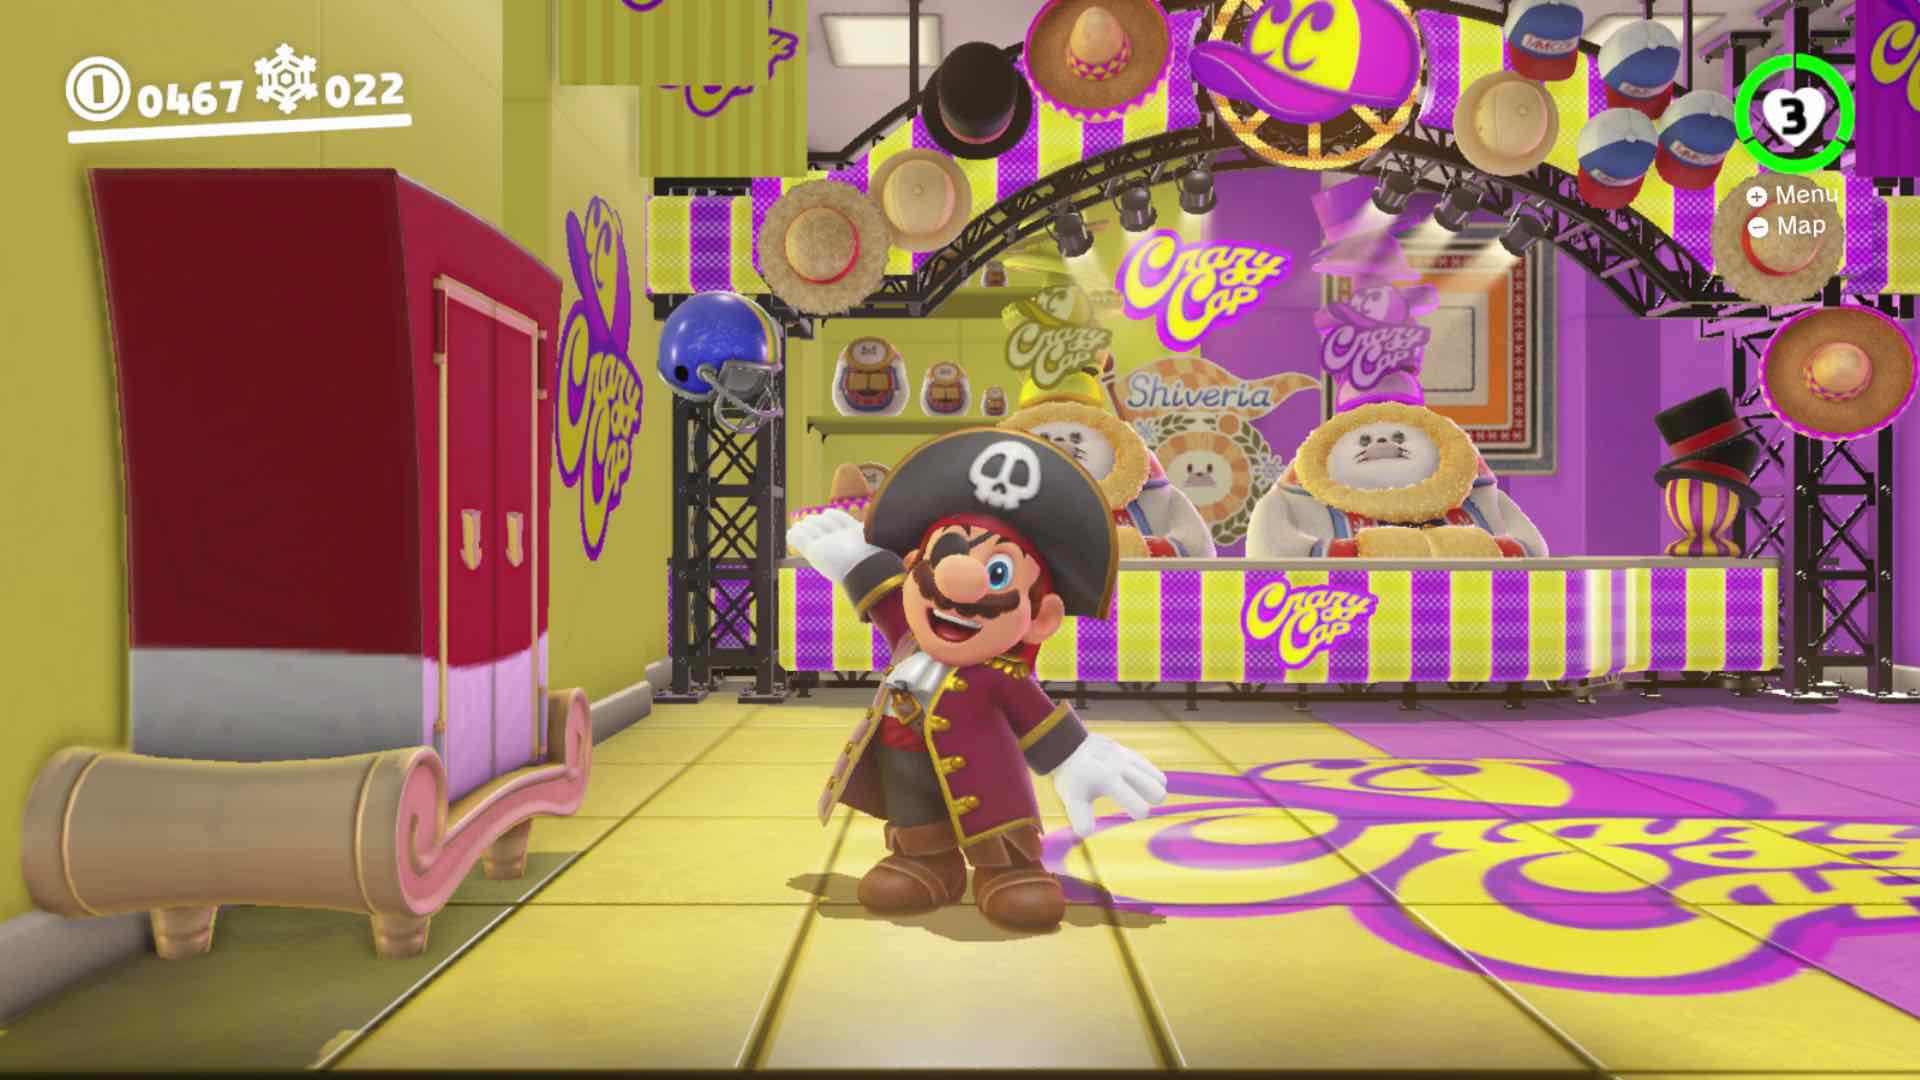 pirate-outfit-super-mario-odyssey-screenshot